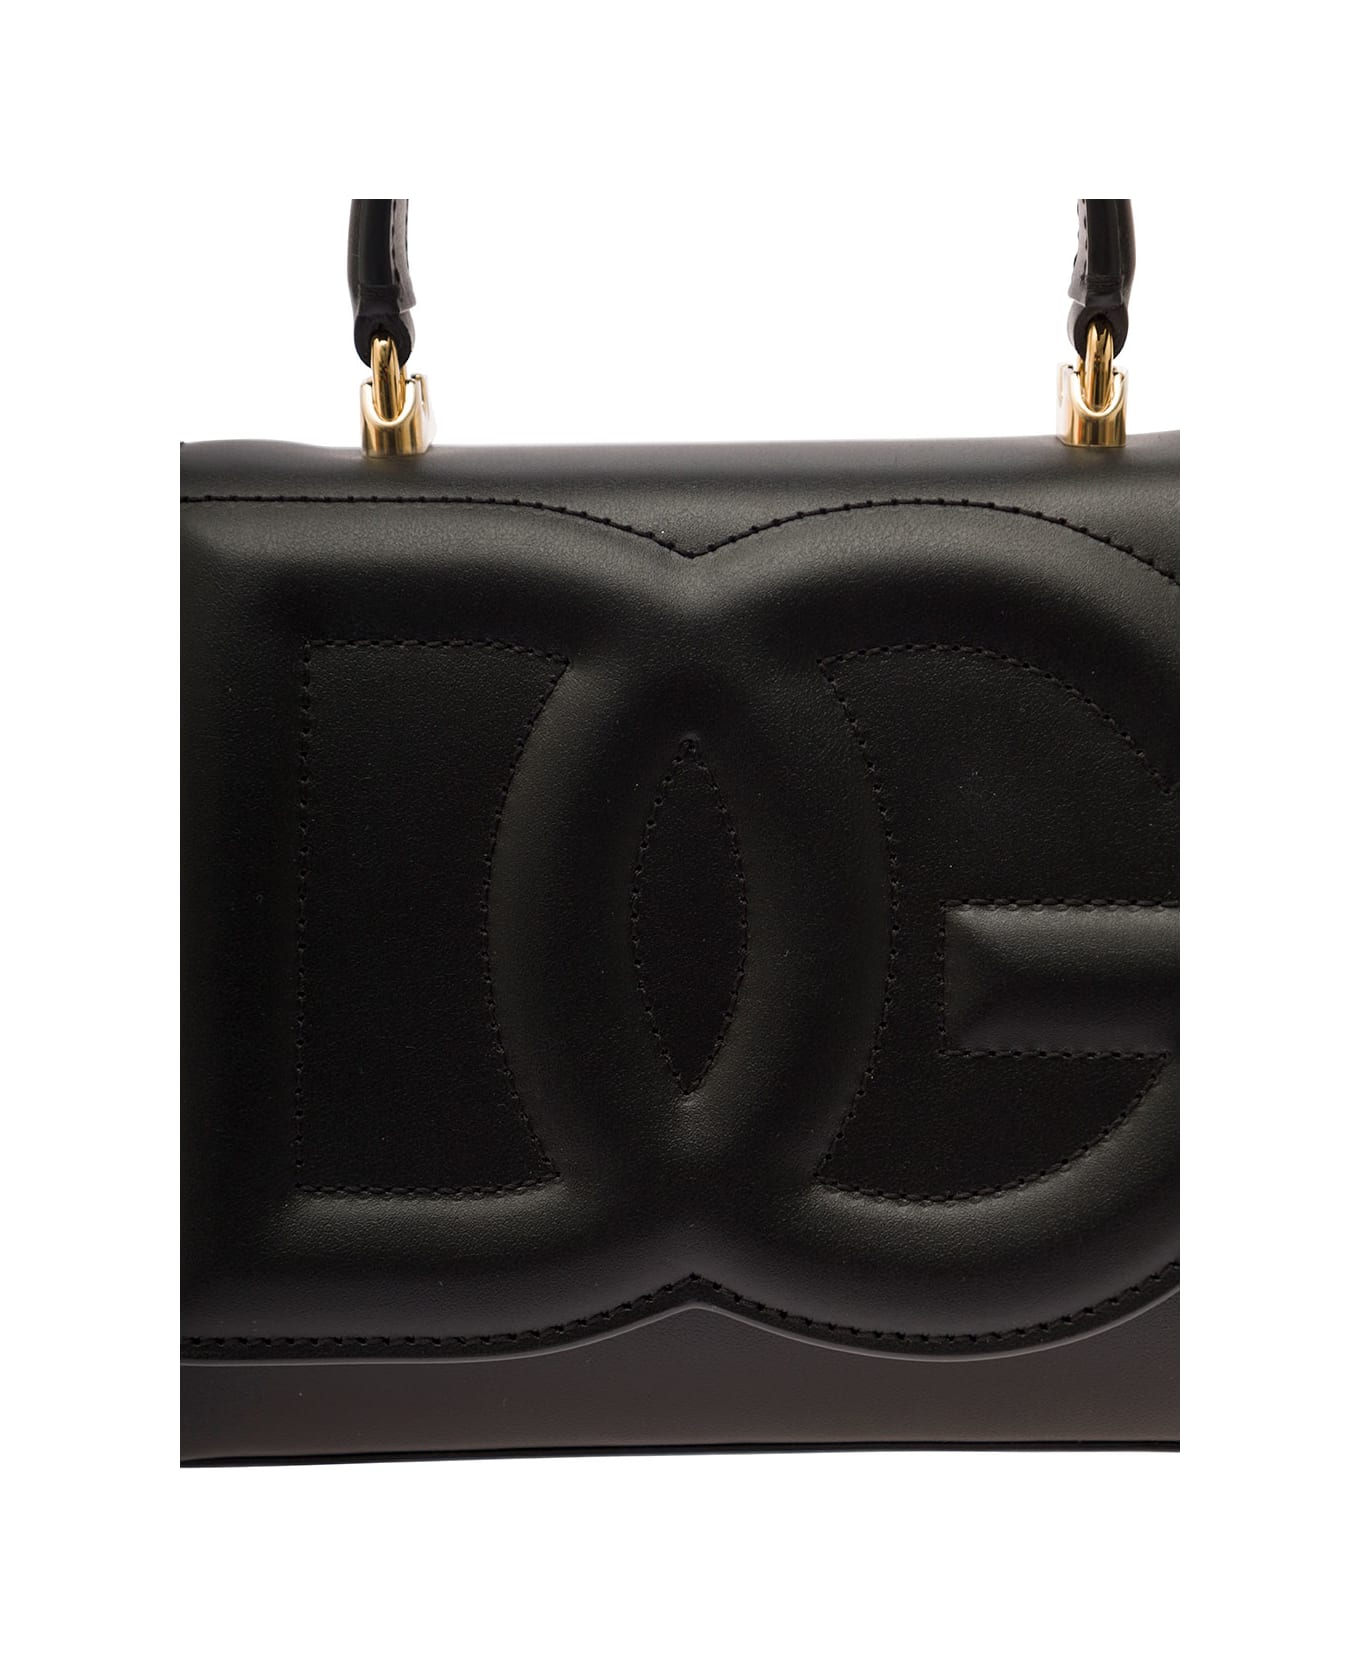 Dolce & Gabbana 'top Handle Dg' Black Handbag With Logo Detail In Metallic Leather Woman - Black